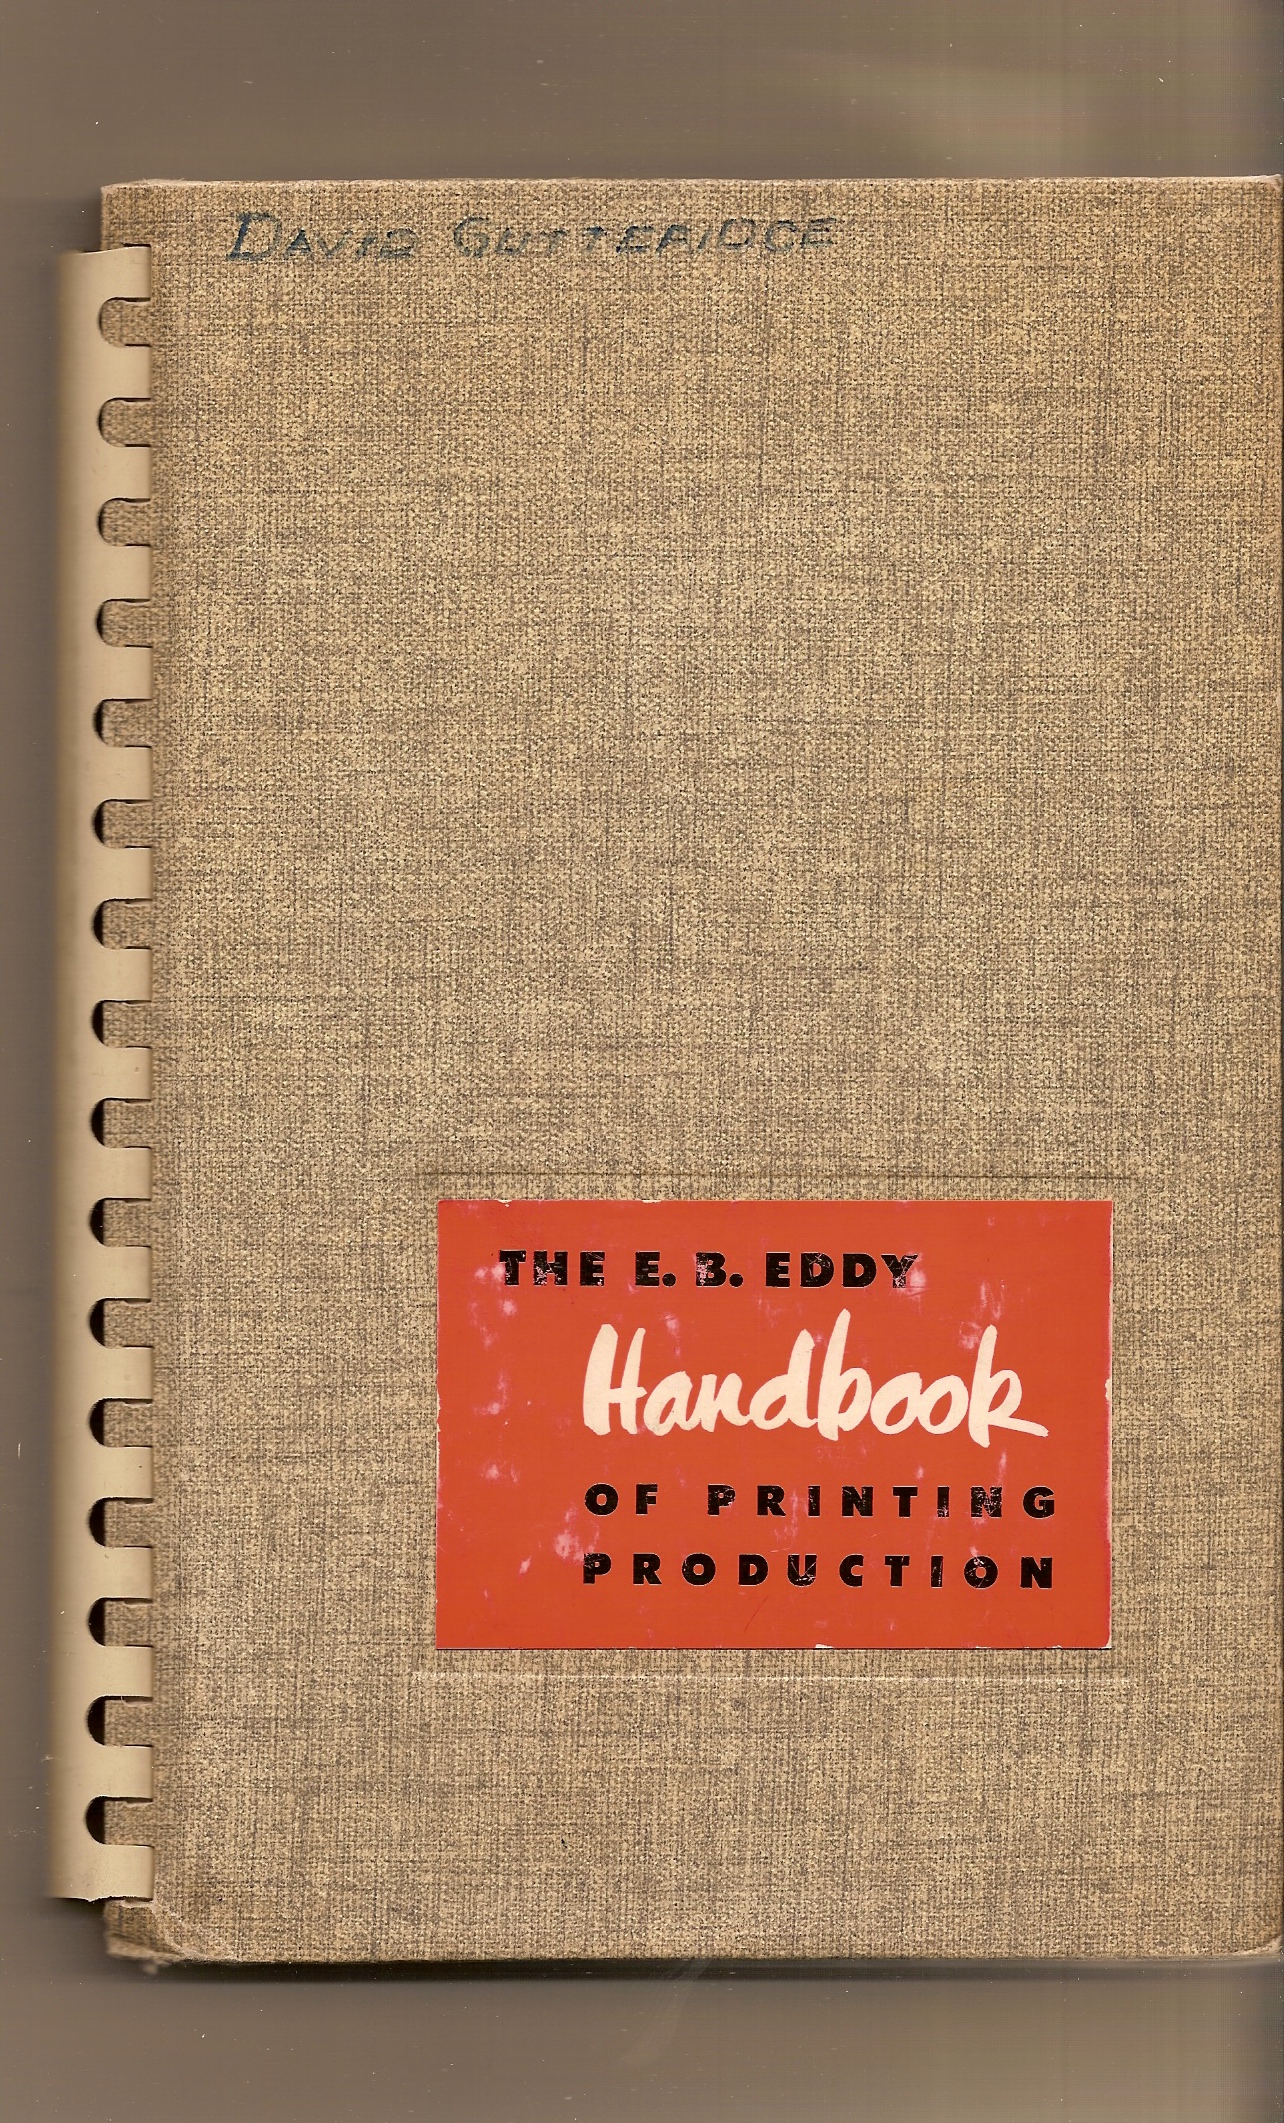 E. B. EDDY COMPANY - Handbook of Printing Production